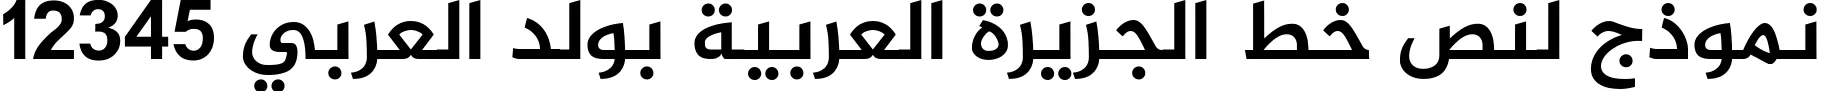 Dynamic Al Jazeera Arabic Bold Font Preview https://safirsoft.com